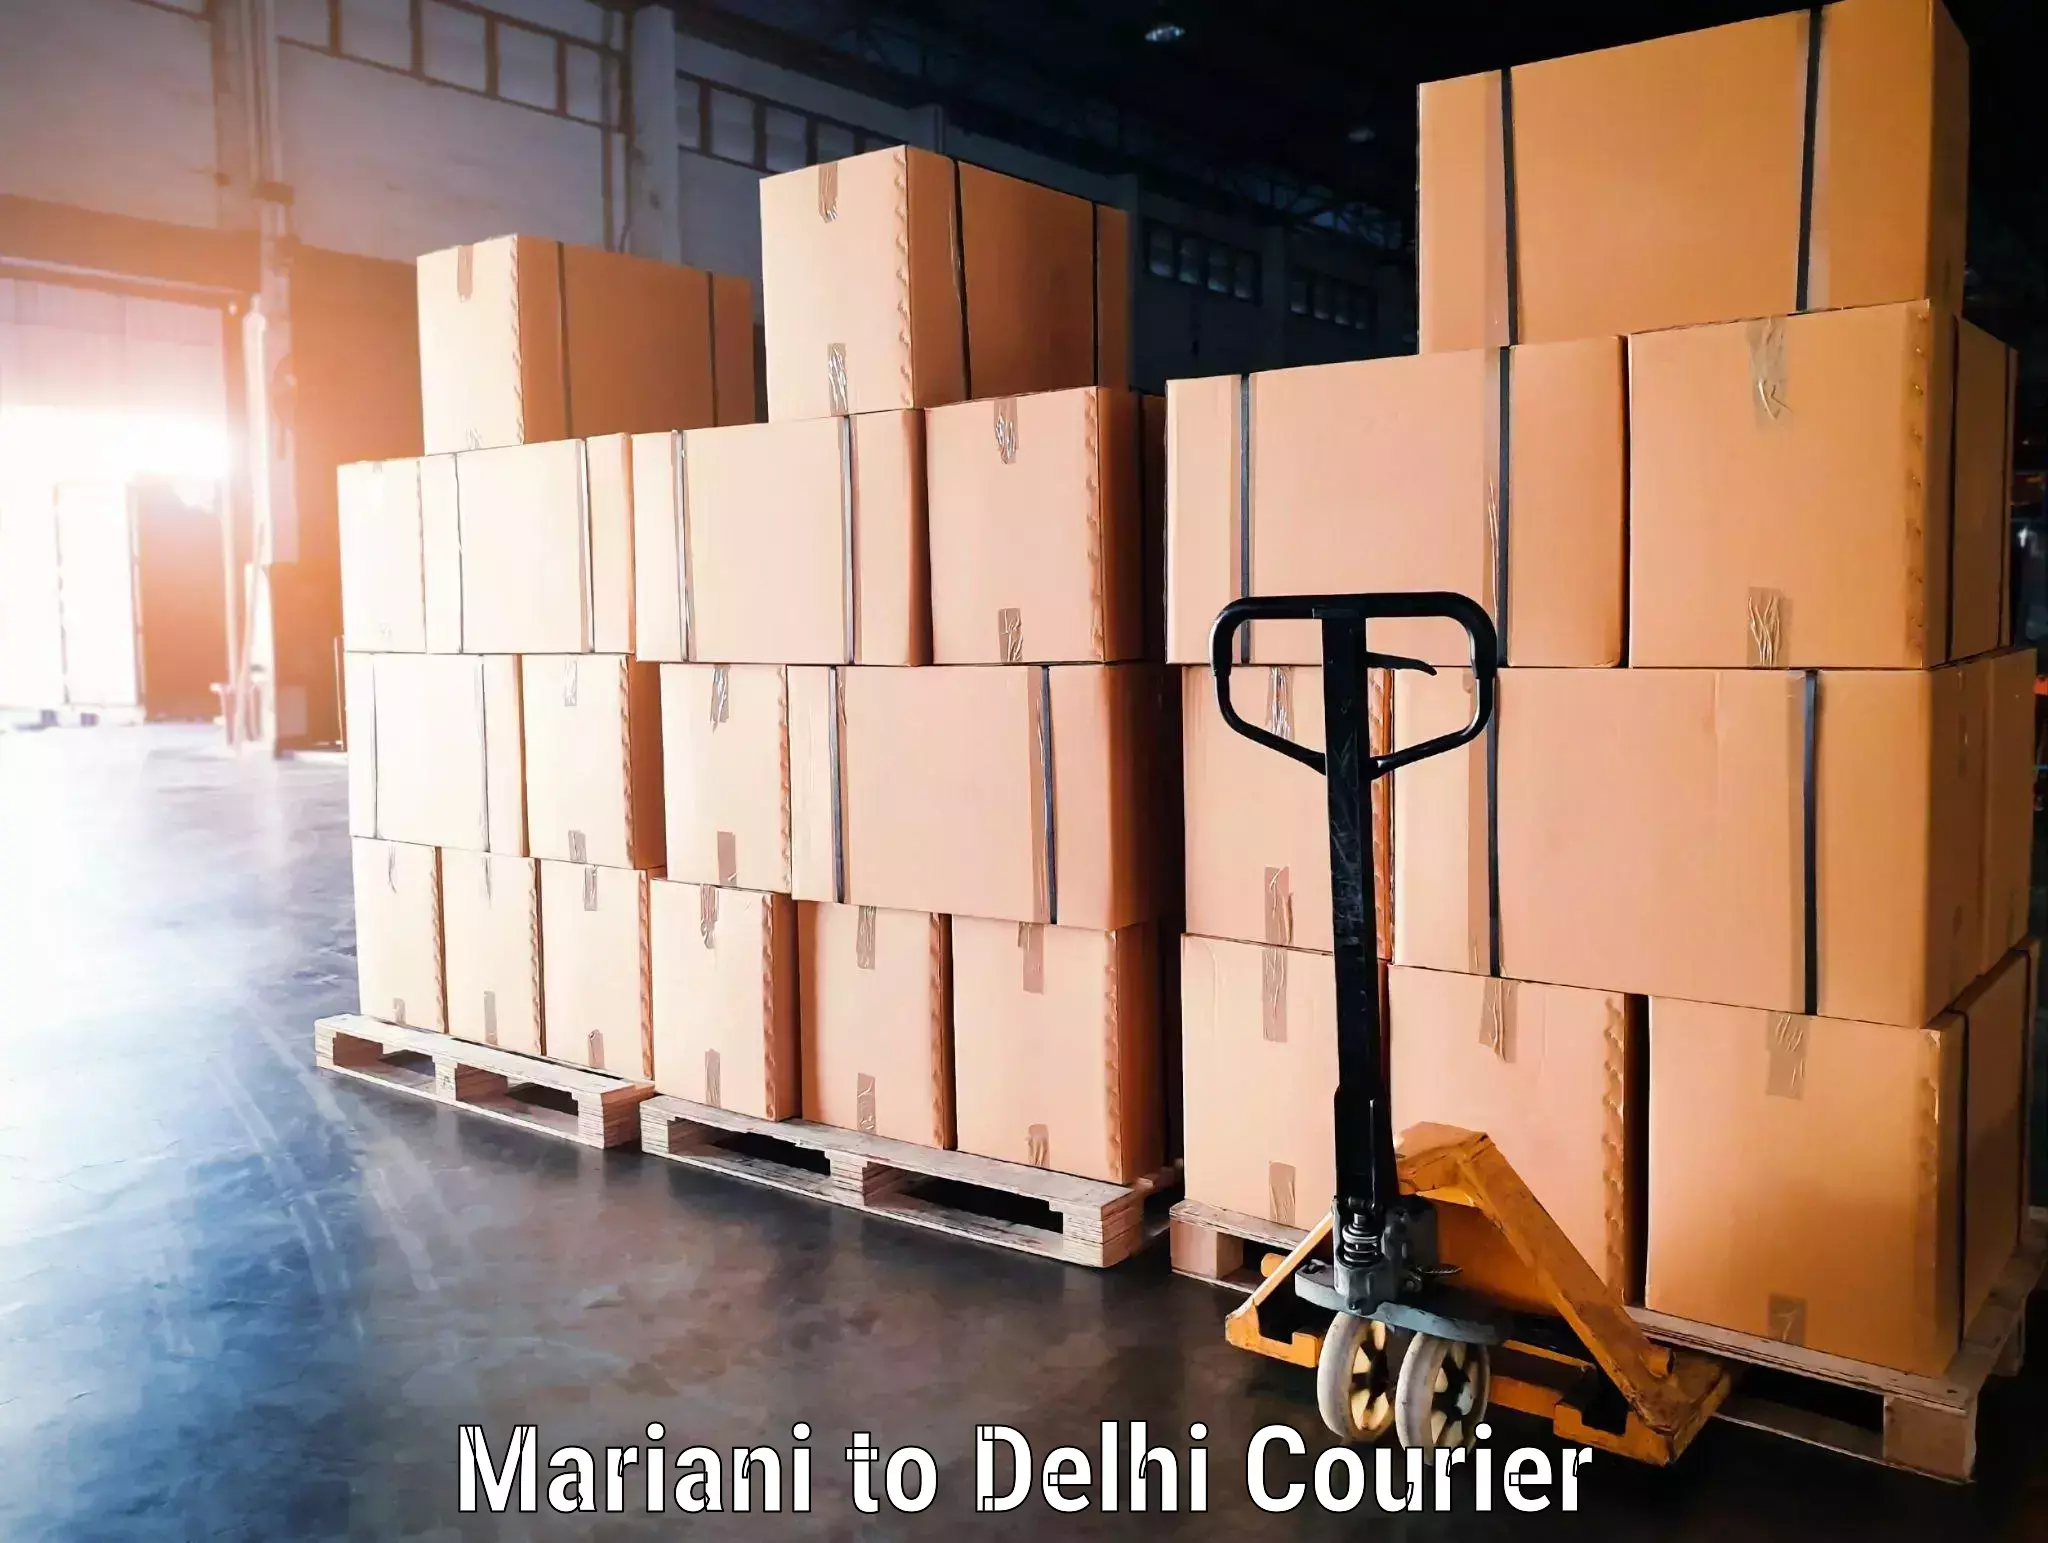 Same day luggage service Mariani to Delhi